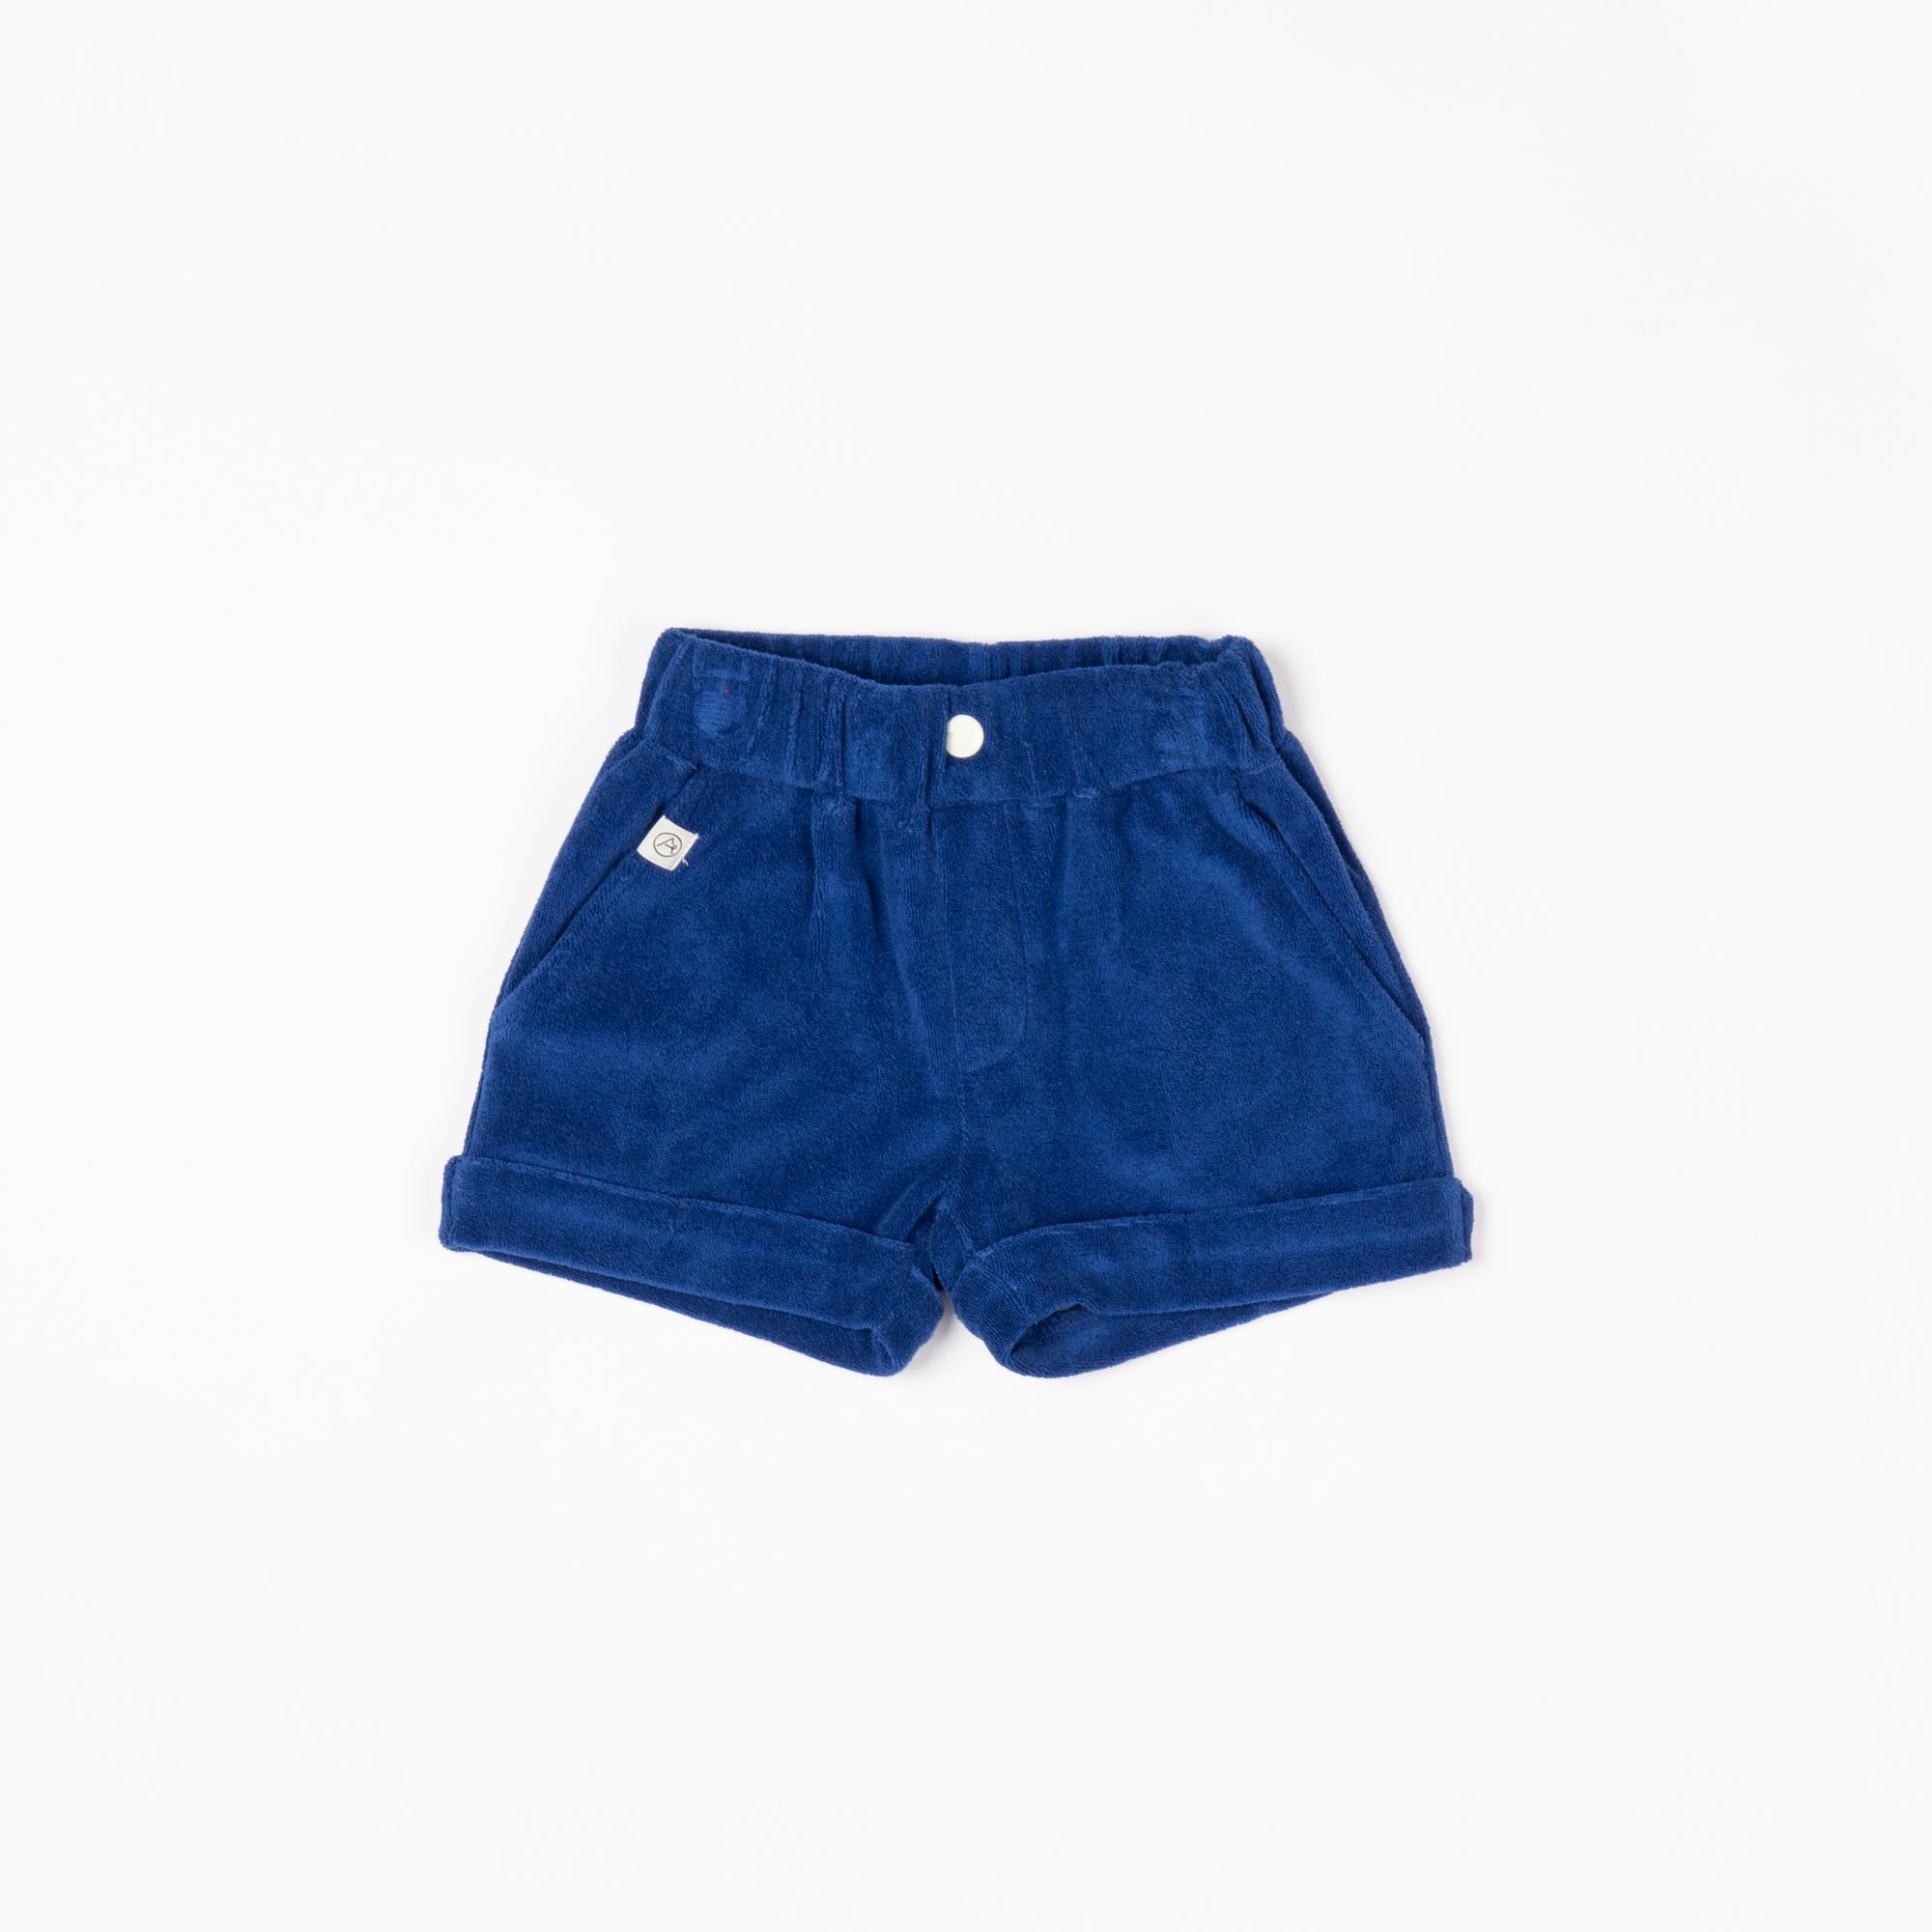 Alba of Denmark - Graham Shorts Solidate Blue